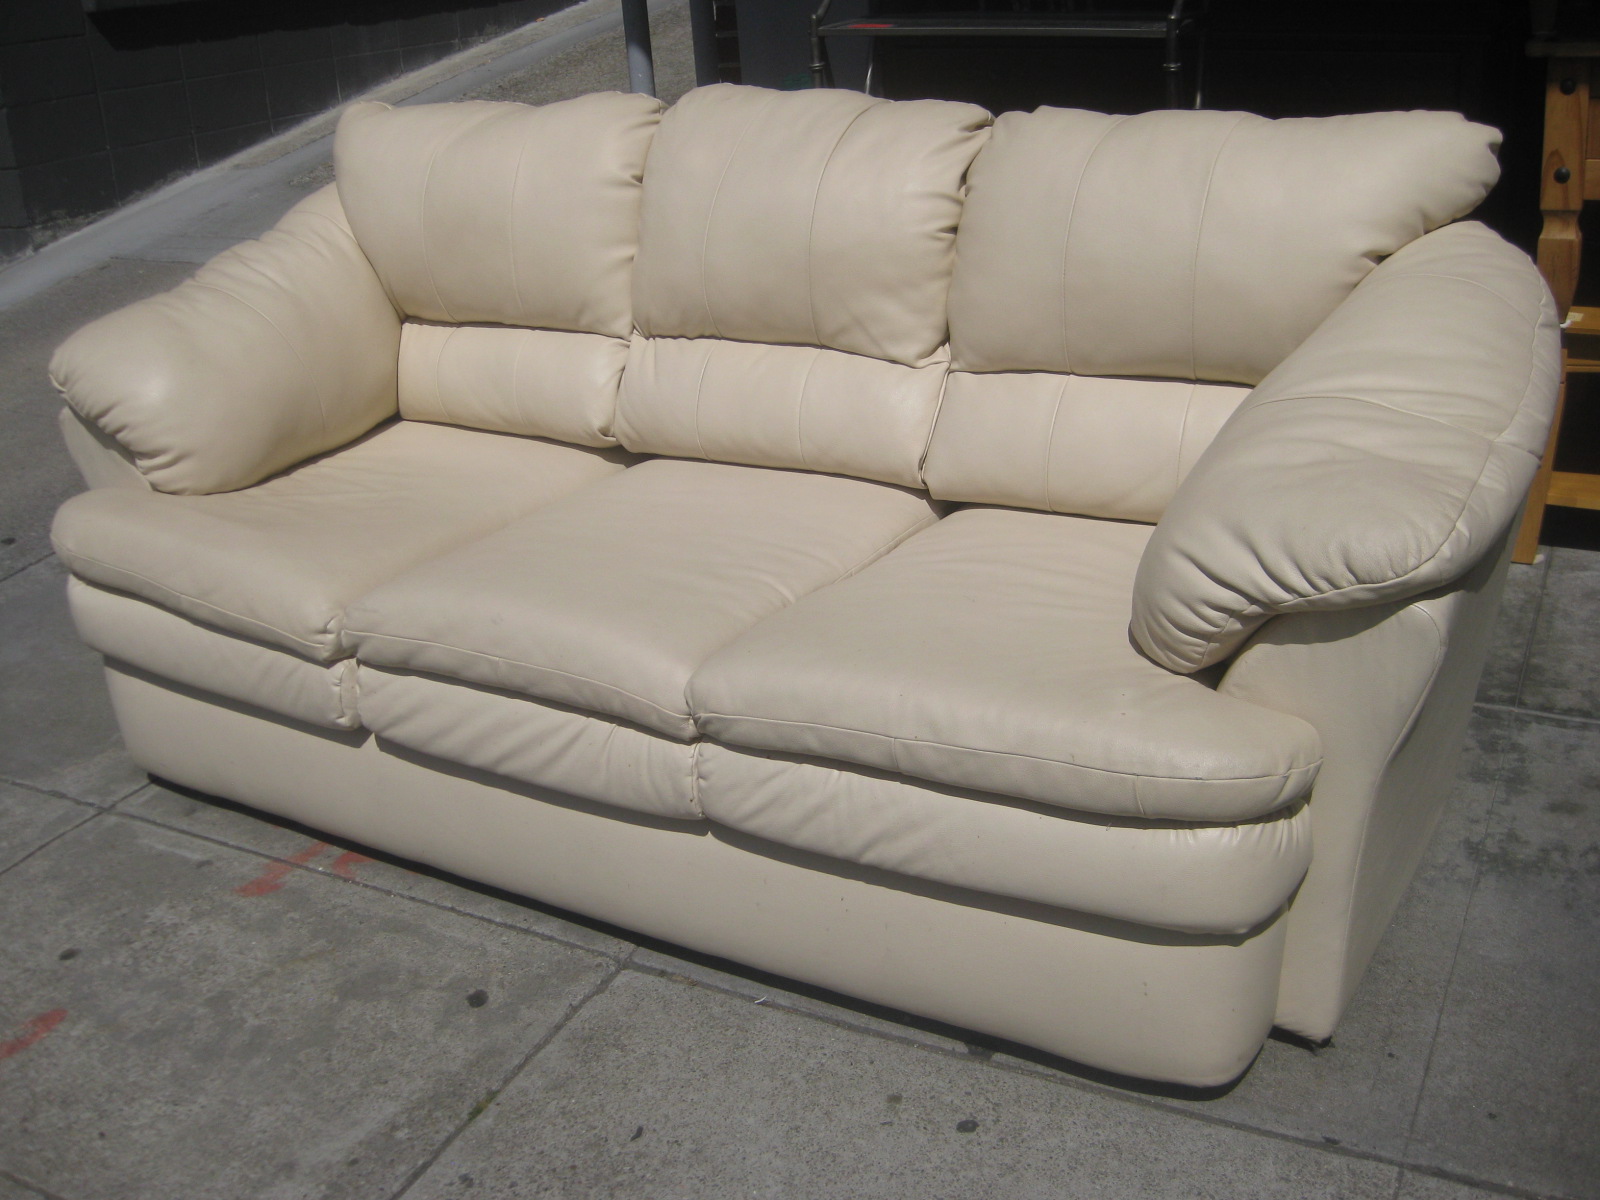 UHURU FURNITURE & COLLECTIBLES: SOLD - White Leather Sofa ...